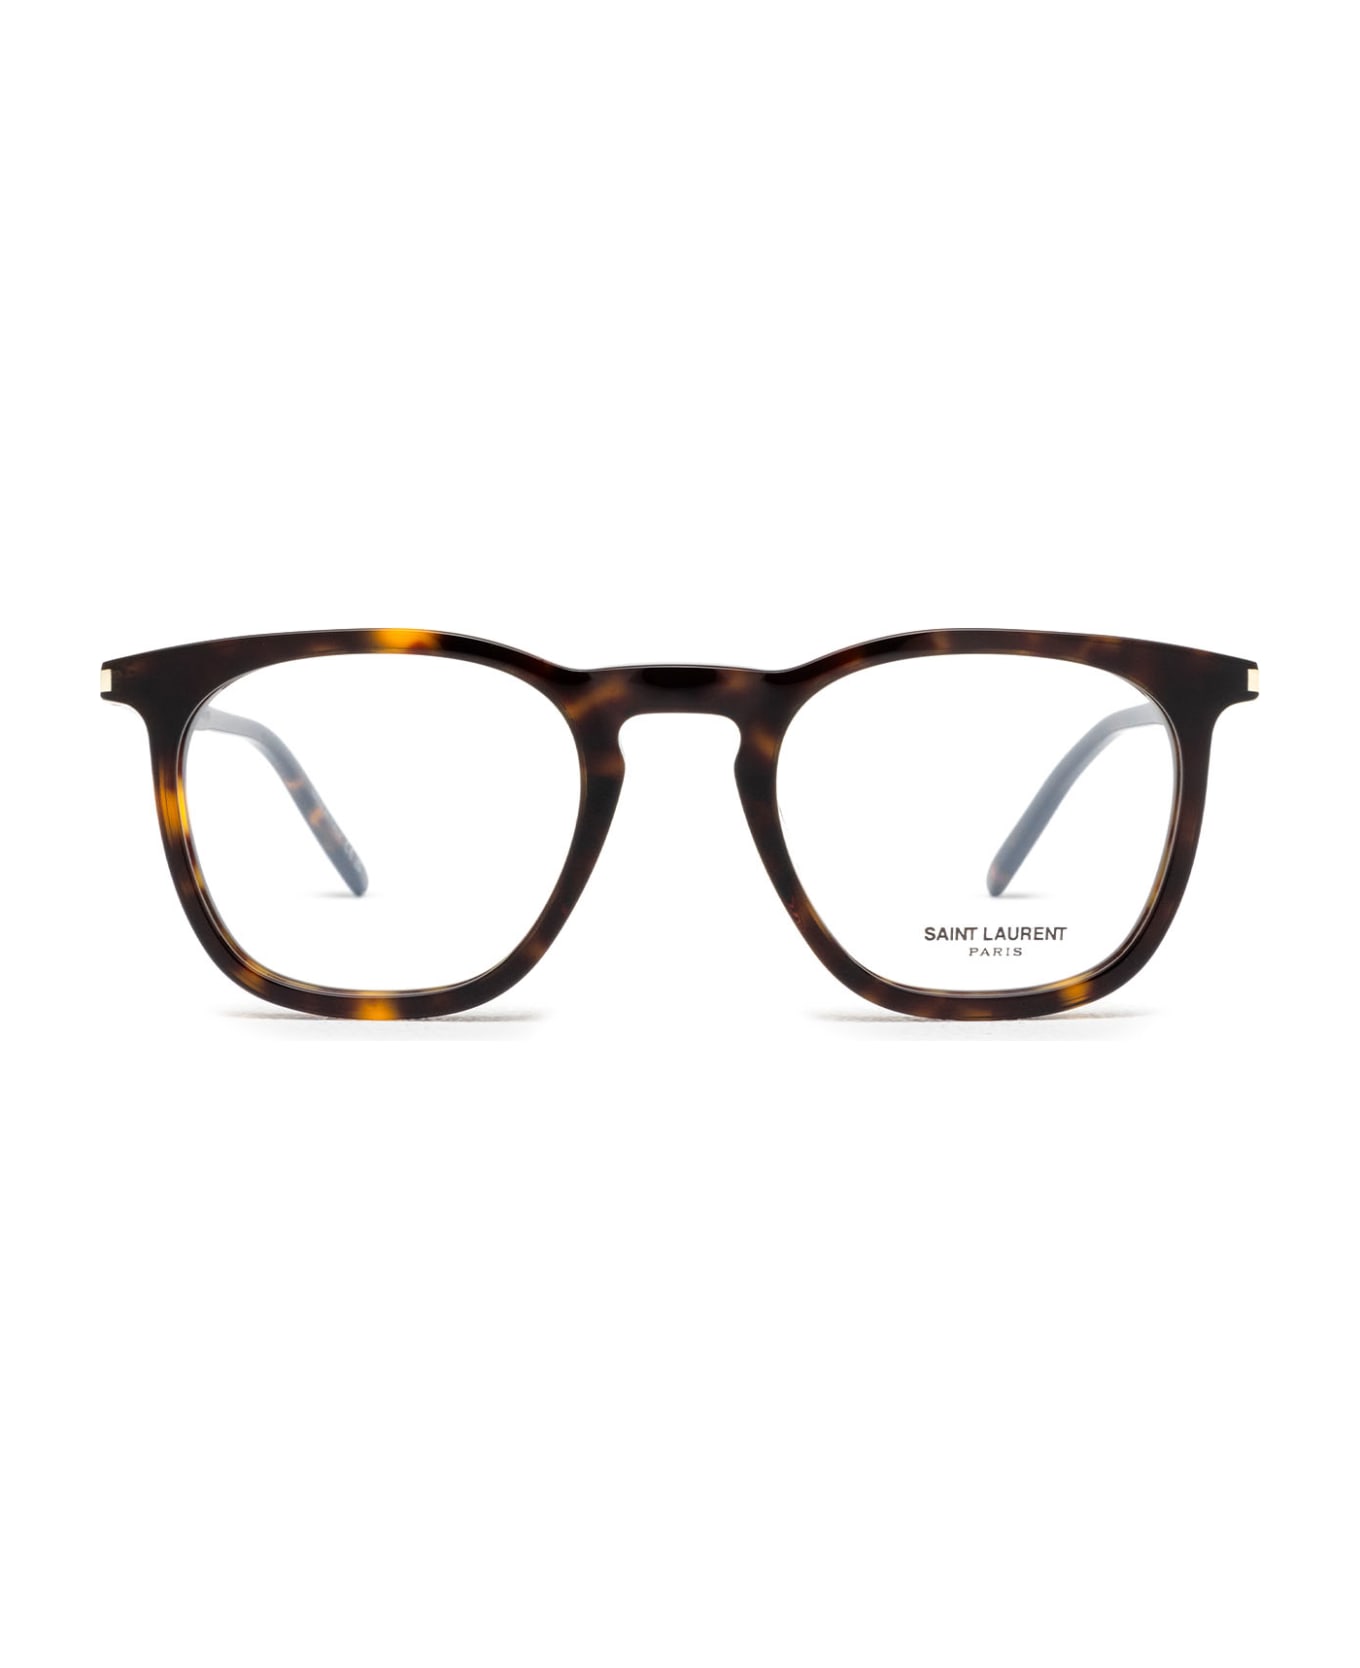 Saint Laurent Eyewear Sl 623 Opt Havana Glasses - Havana